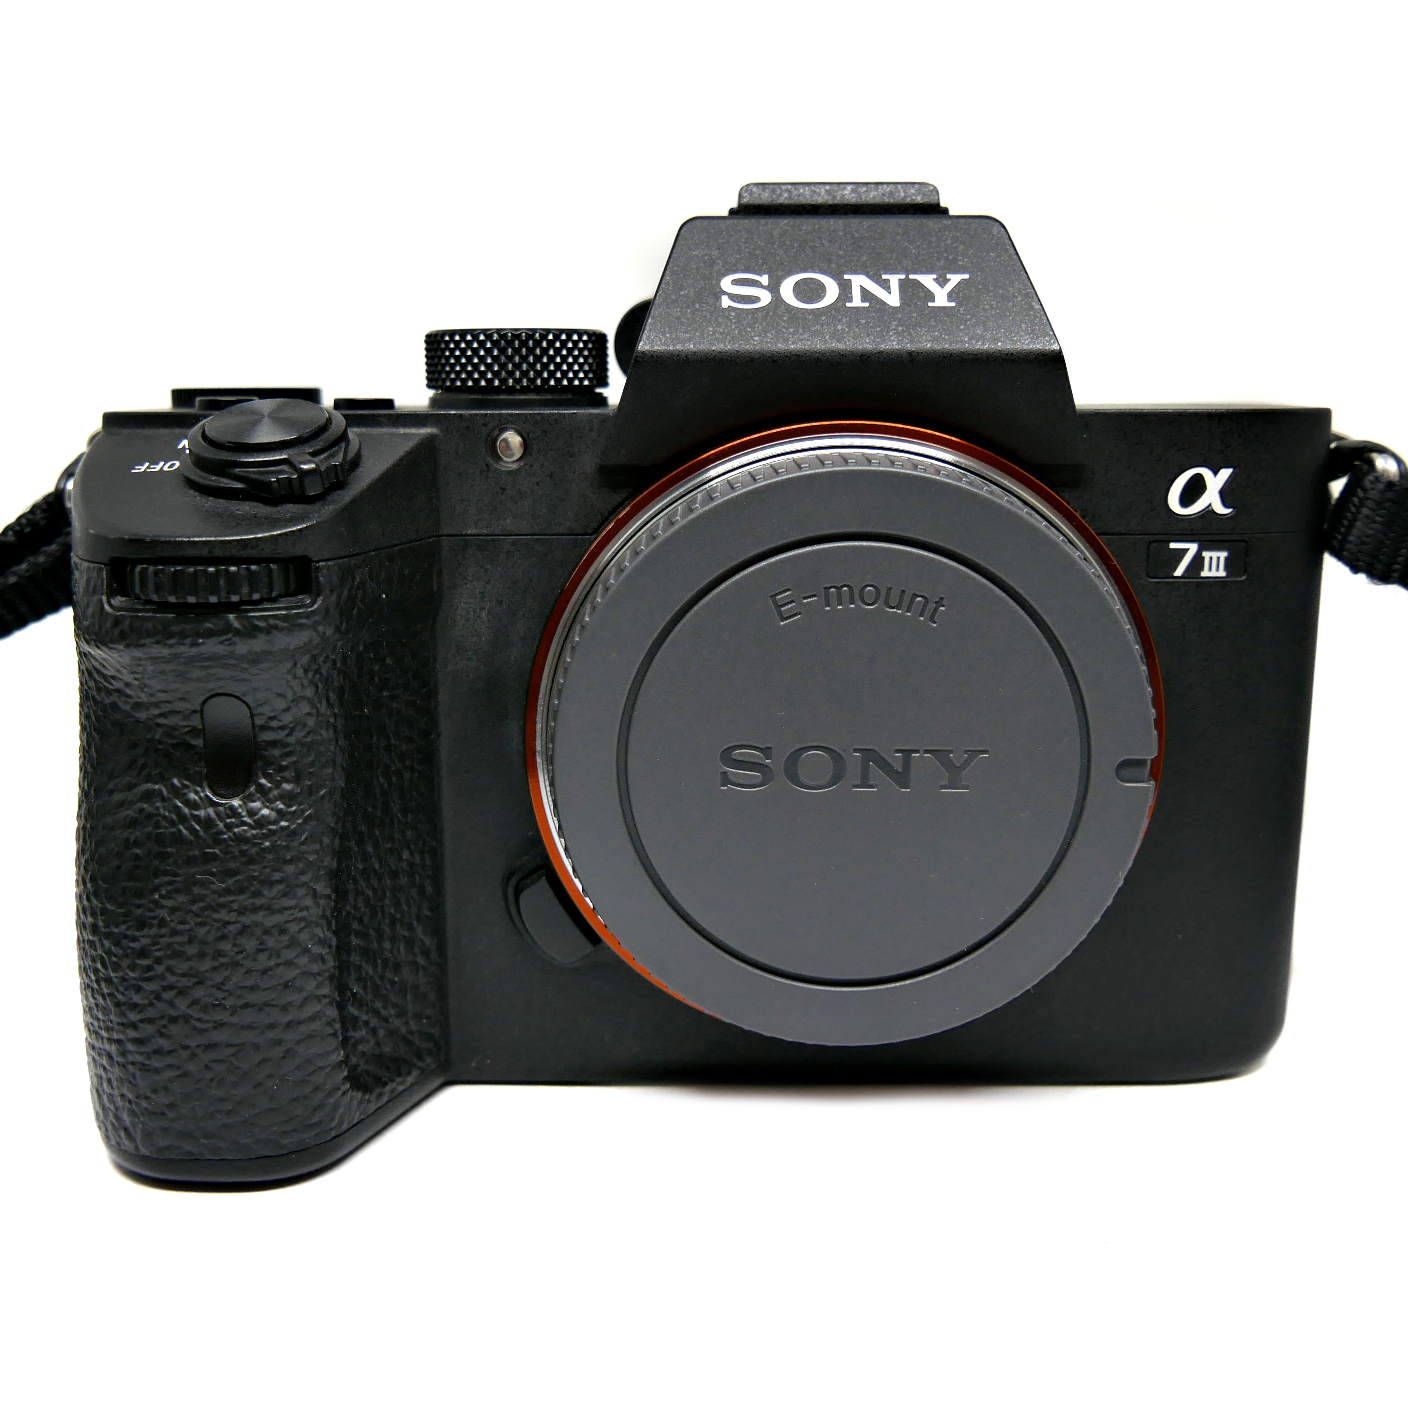 (Myyty) Sony A7 Mark III (SC:6950) (käytetty) (takuu)